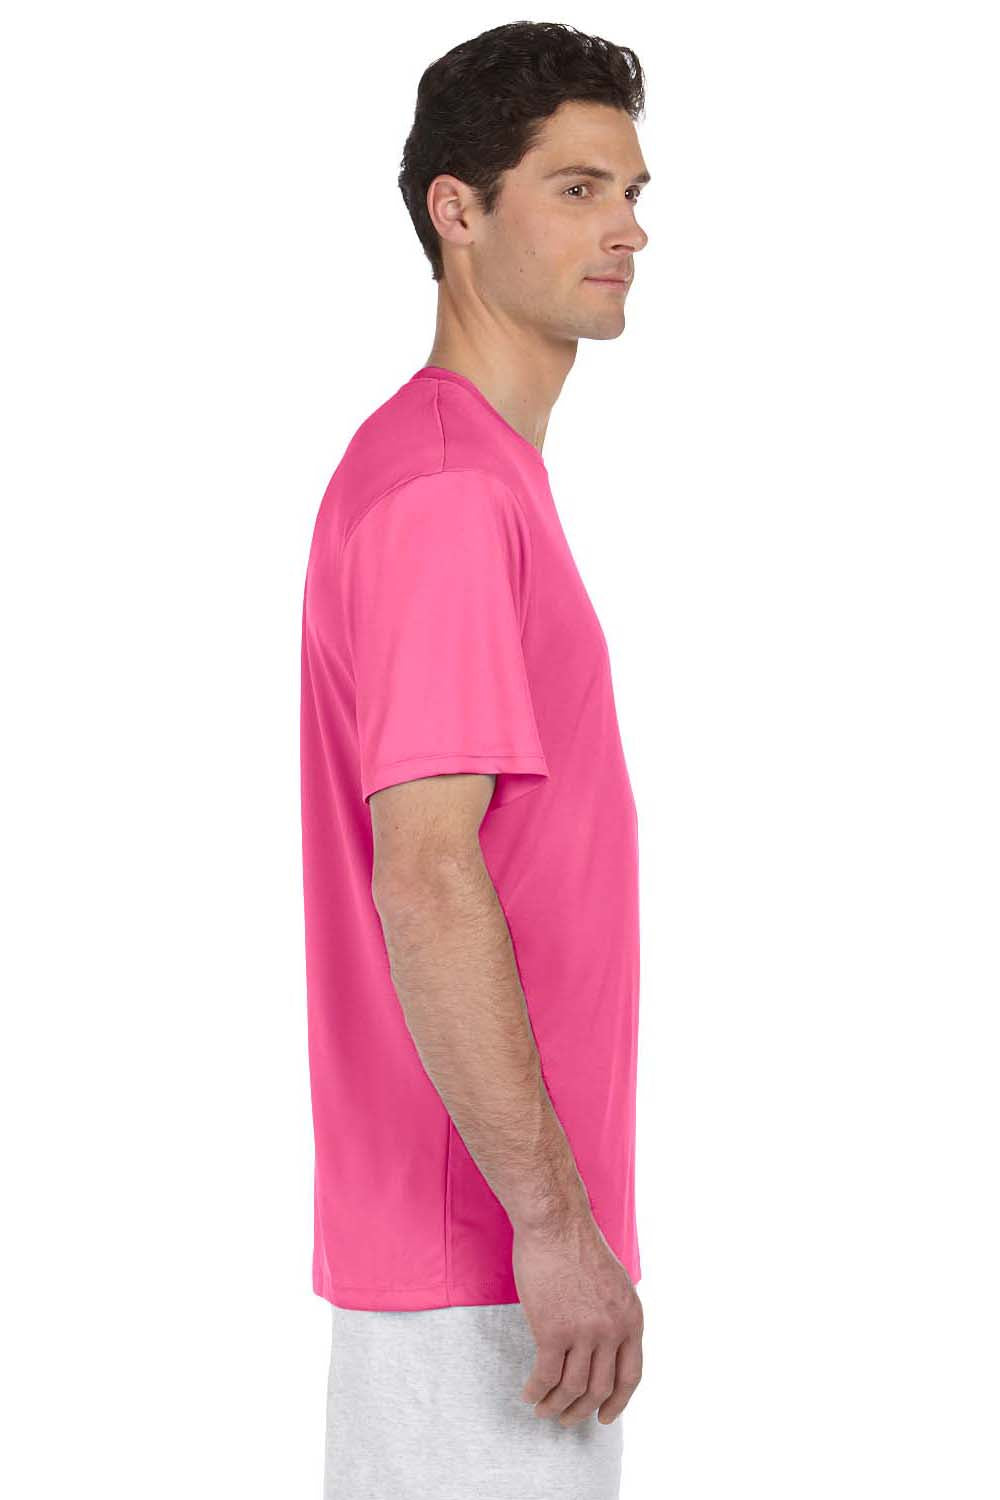 Hanes Men's Long Sleeve T-Shirt Men Cool DRI Performance Athletic Wicking  XS-3XL